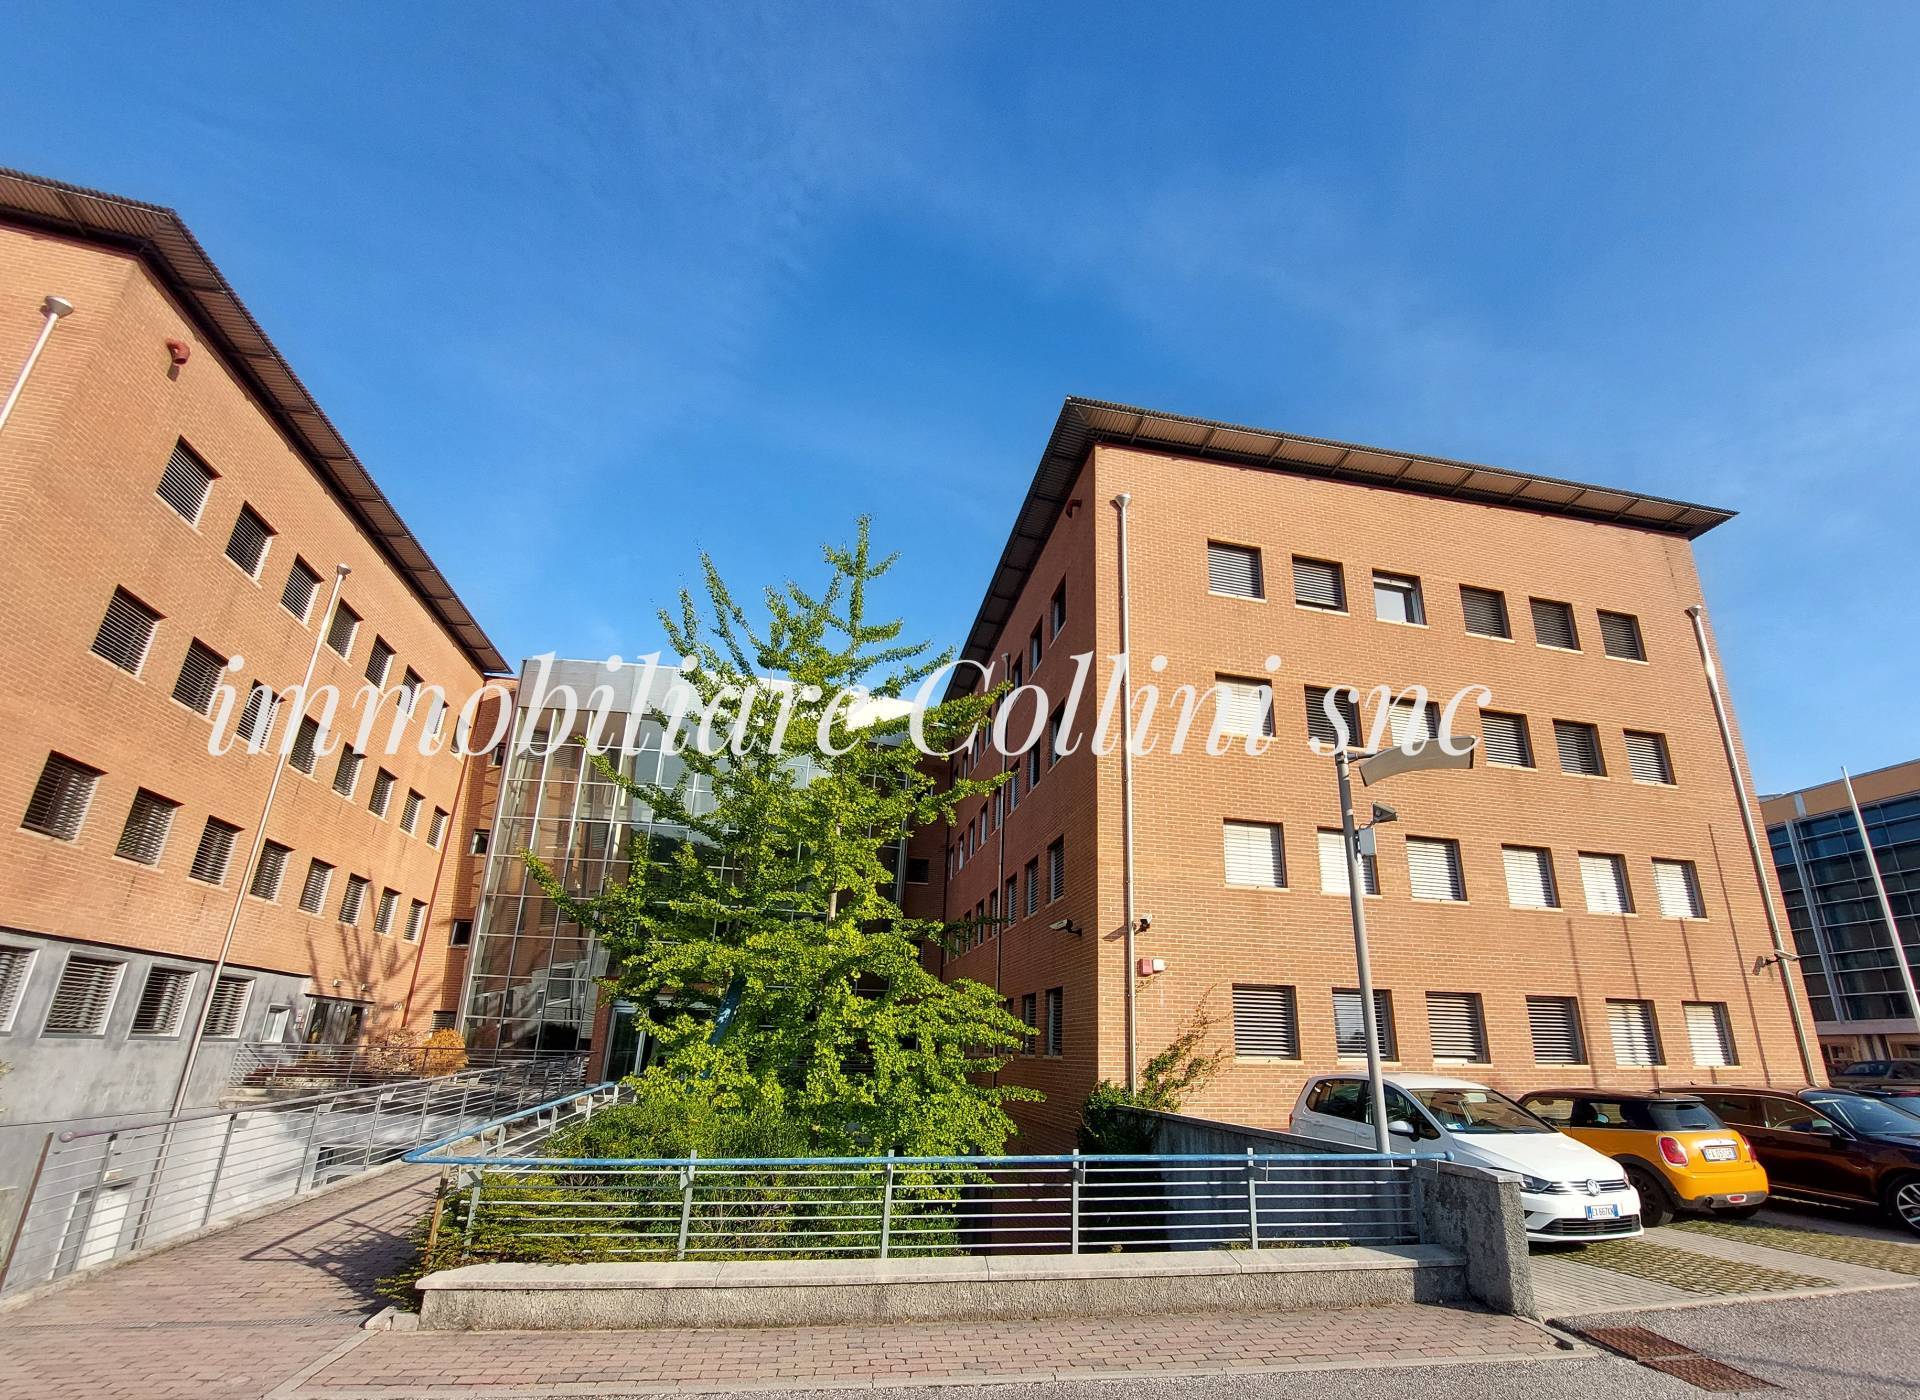 Ufficio in vendita Udine